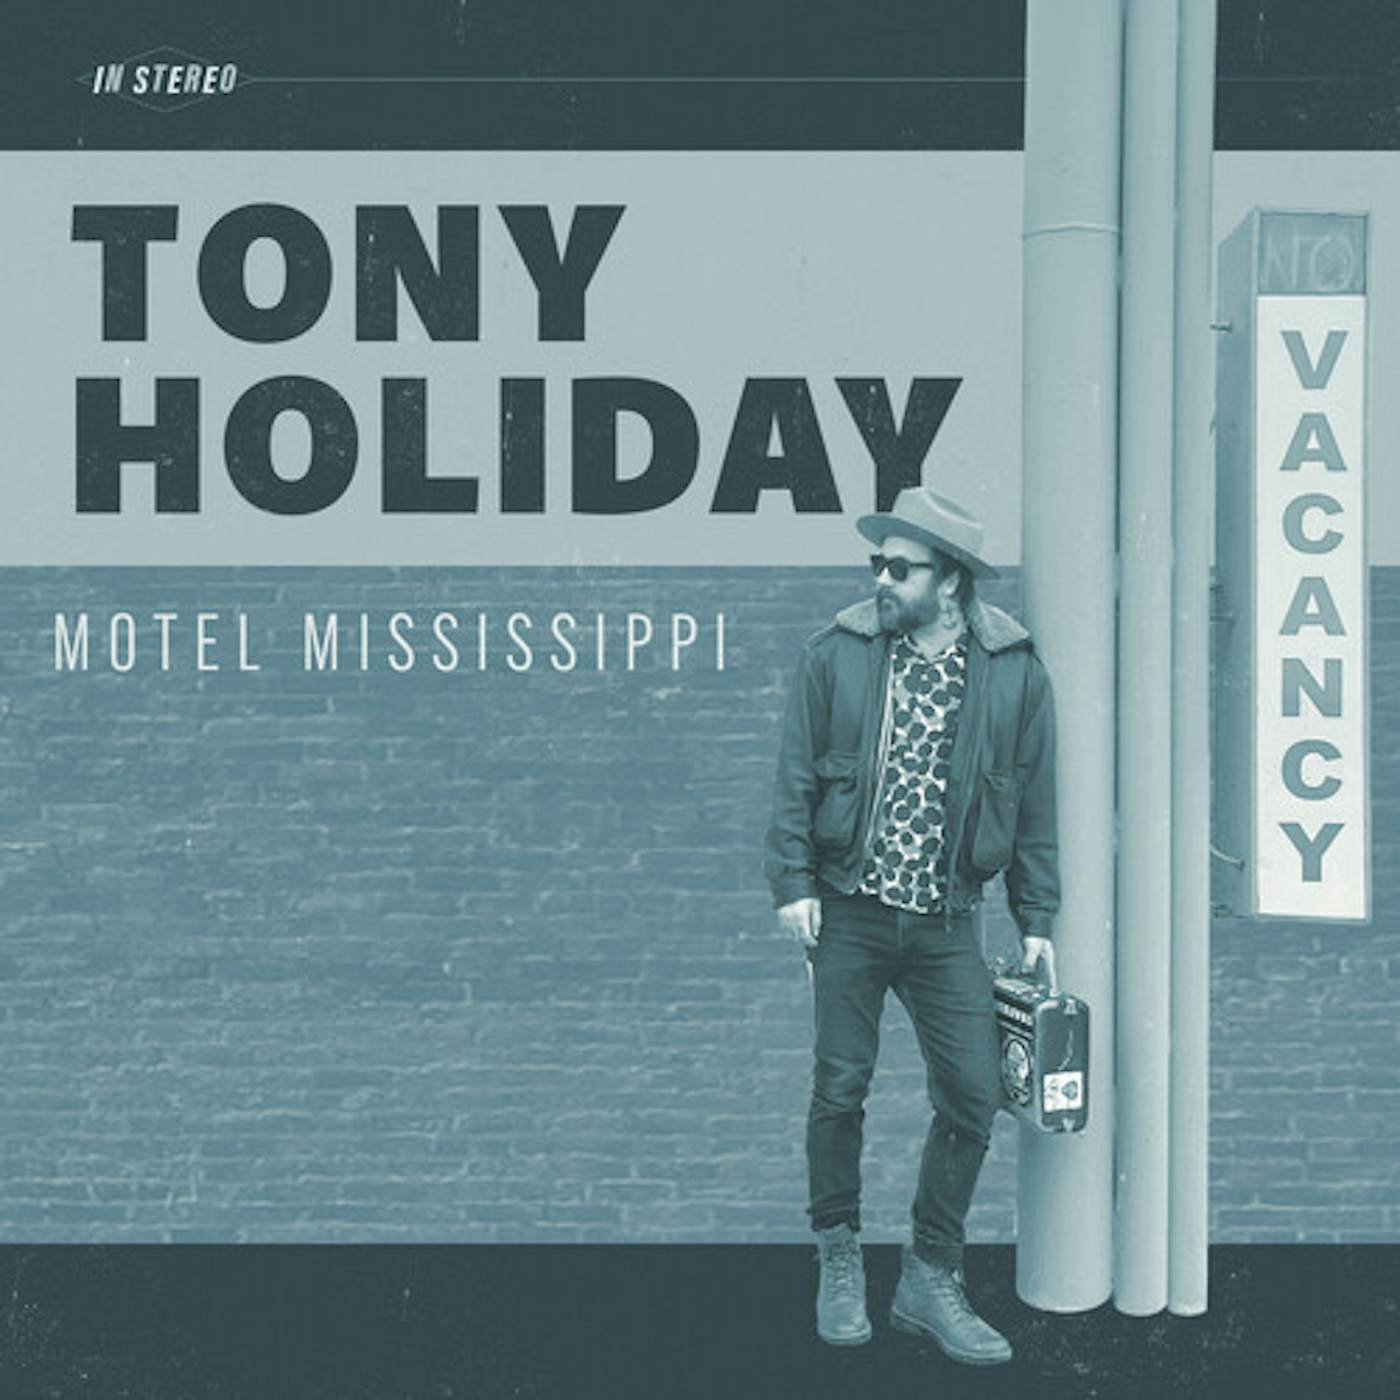 Tony Holiday MOTEL MISSISSIPPI CD